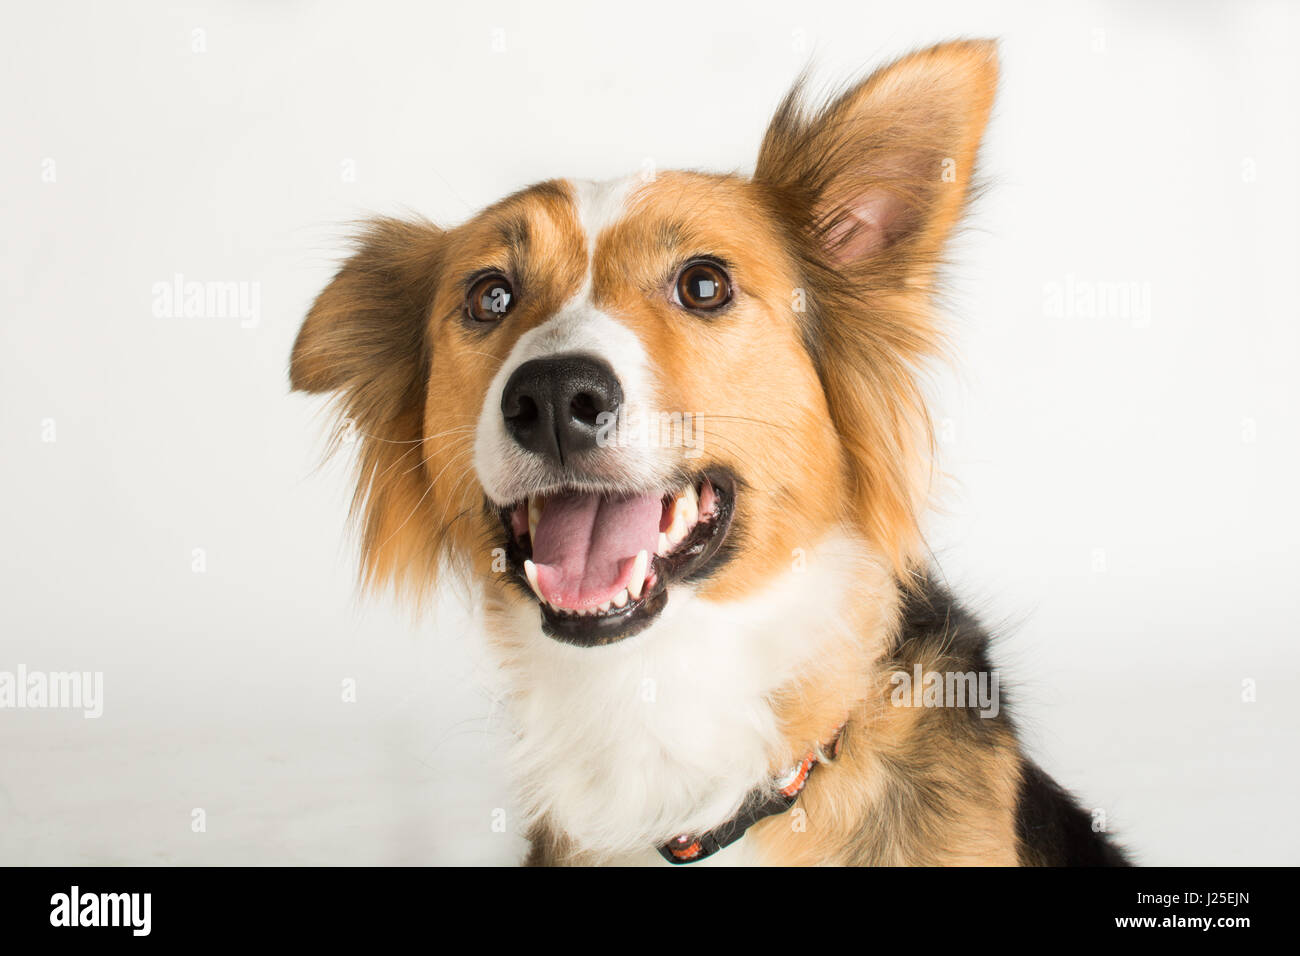 A cute border collie dog in the studio Stock Photo